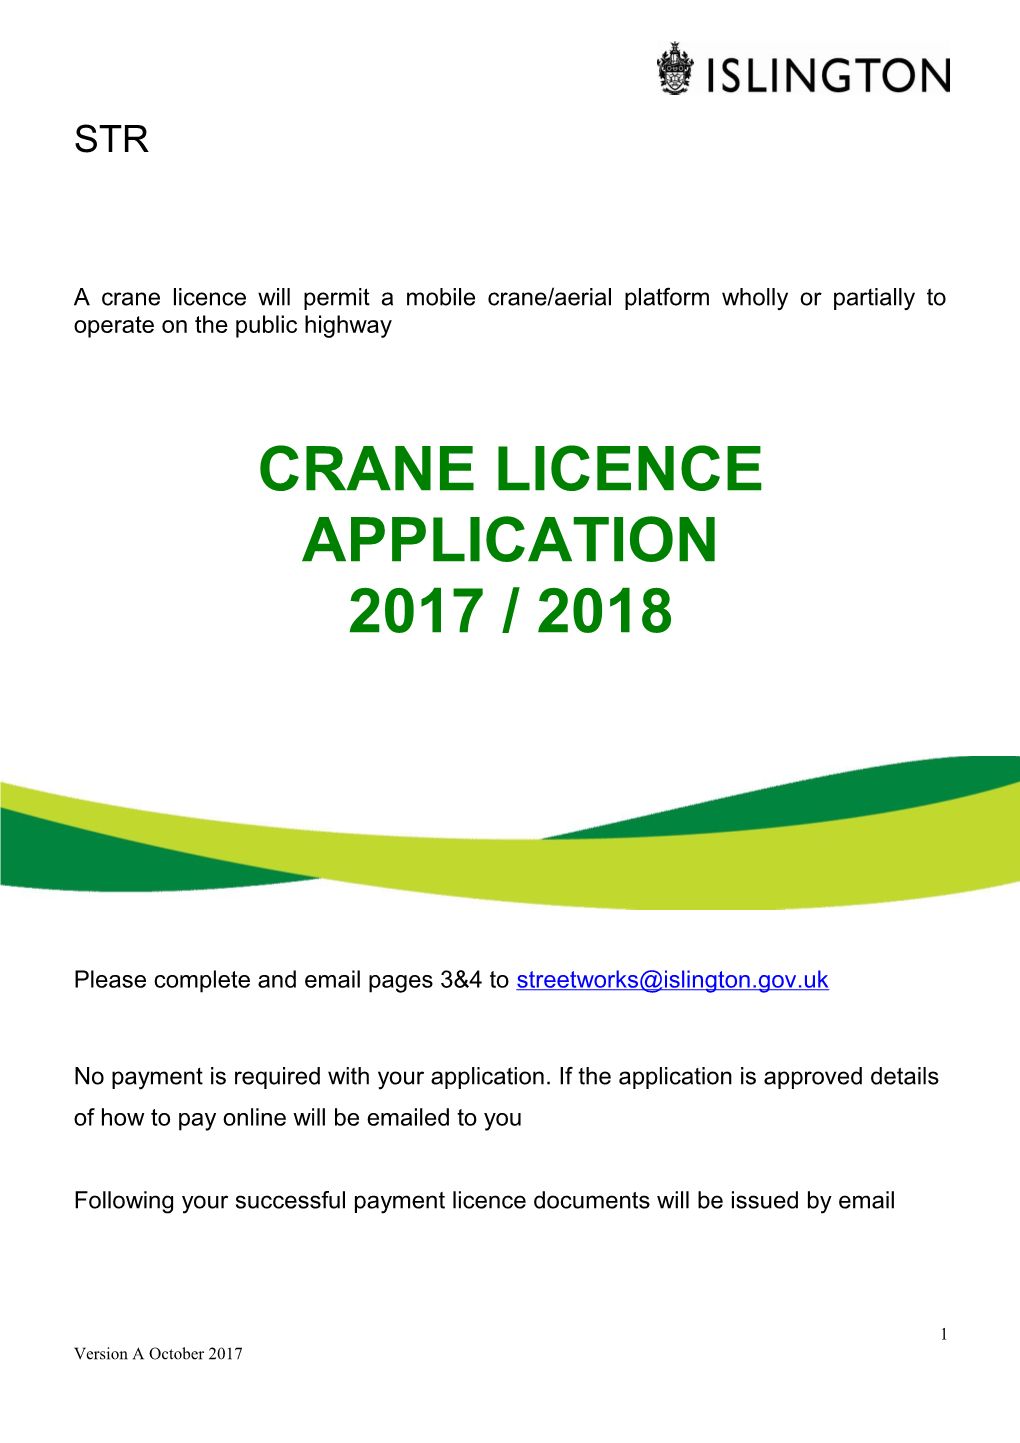 2017 Crane Licence Application Ver a Oct 17